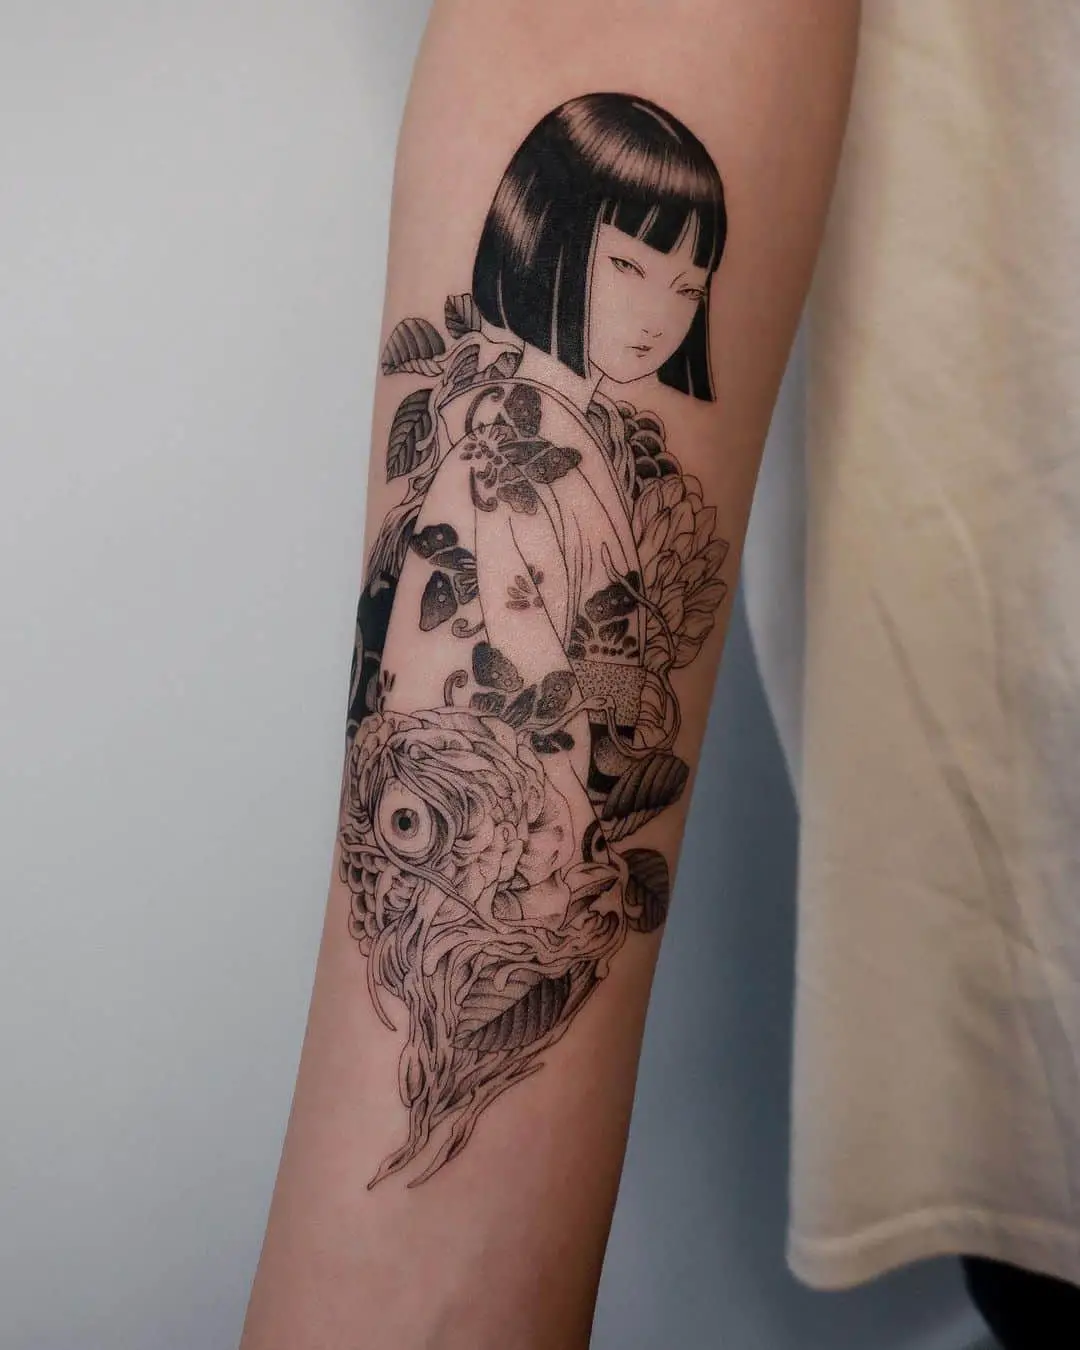 Beutiful japanese anime girl tattoo by jumee.tattoo